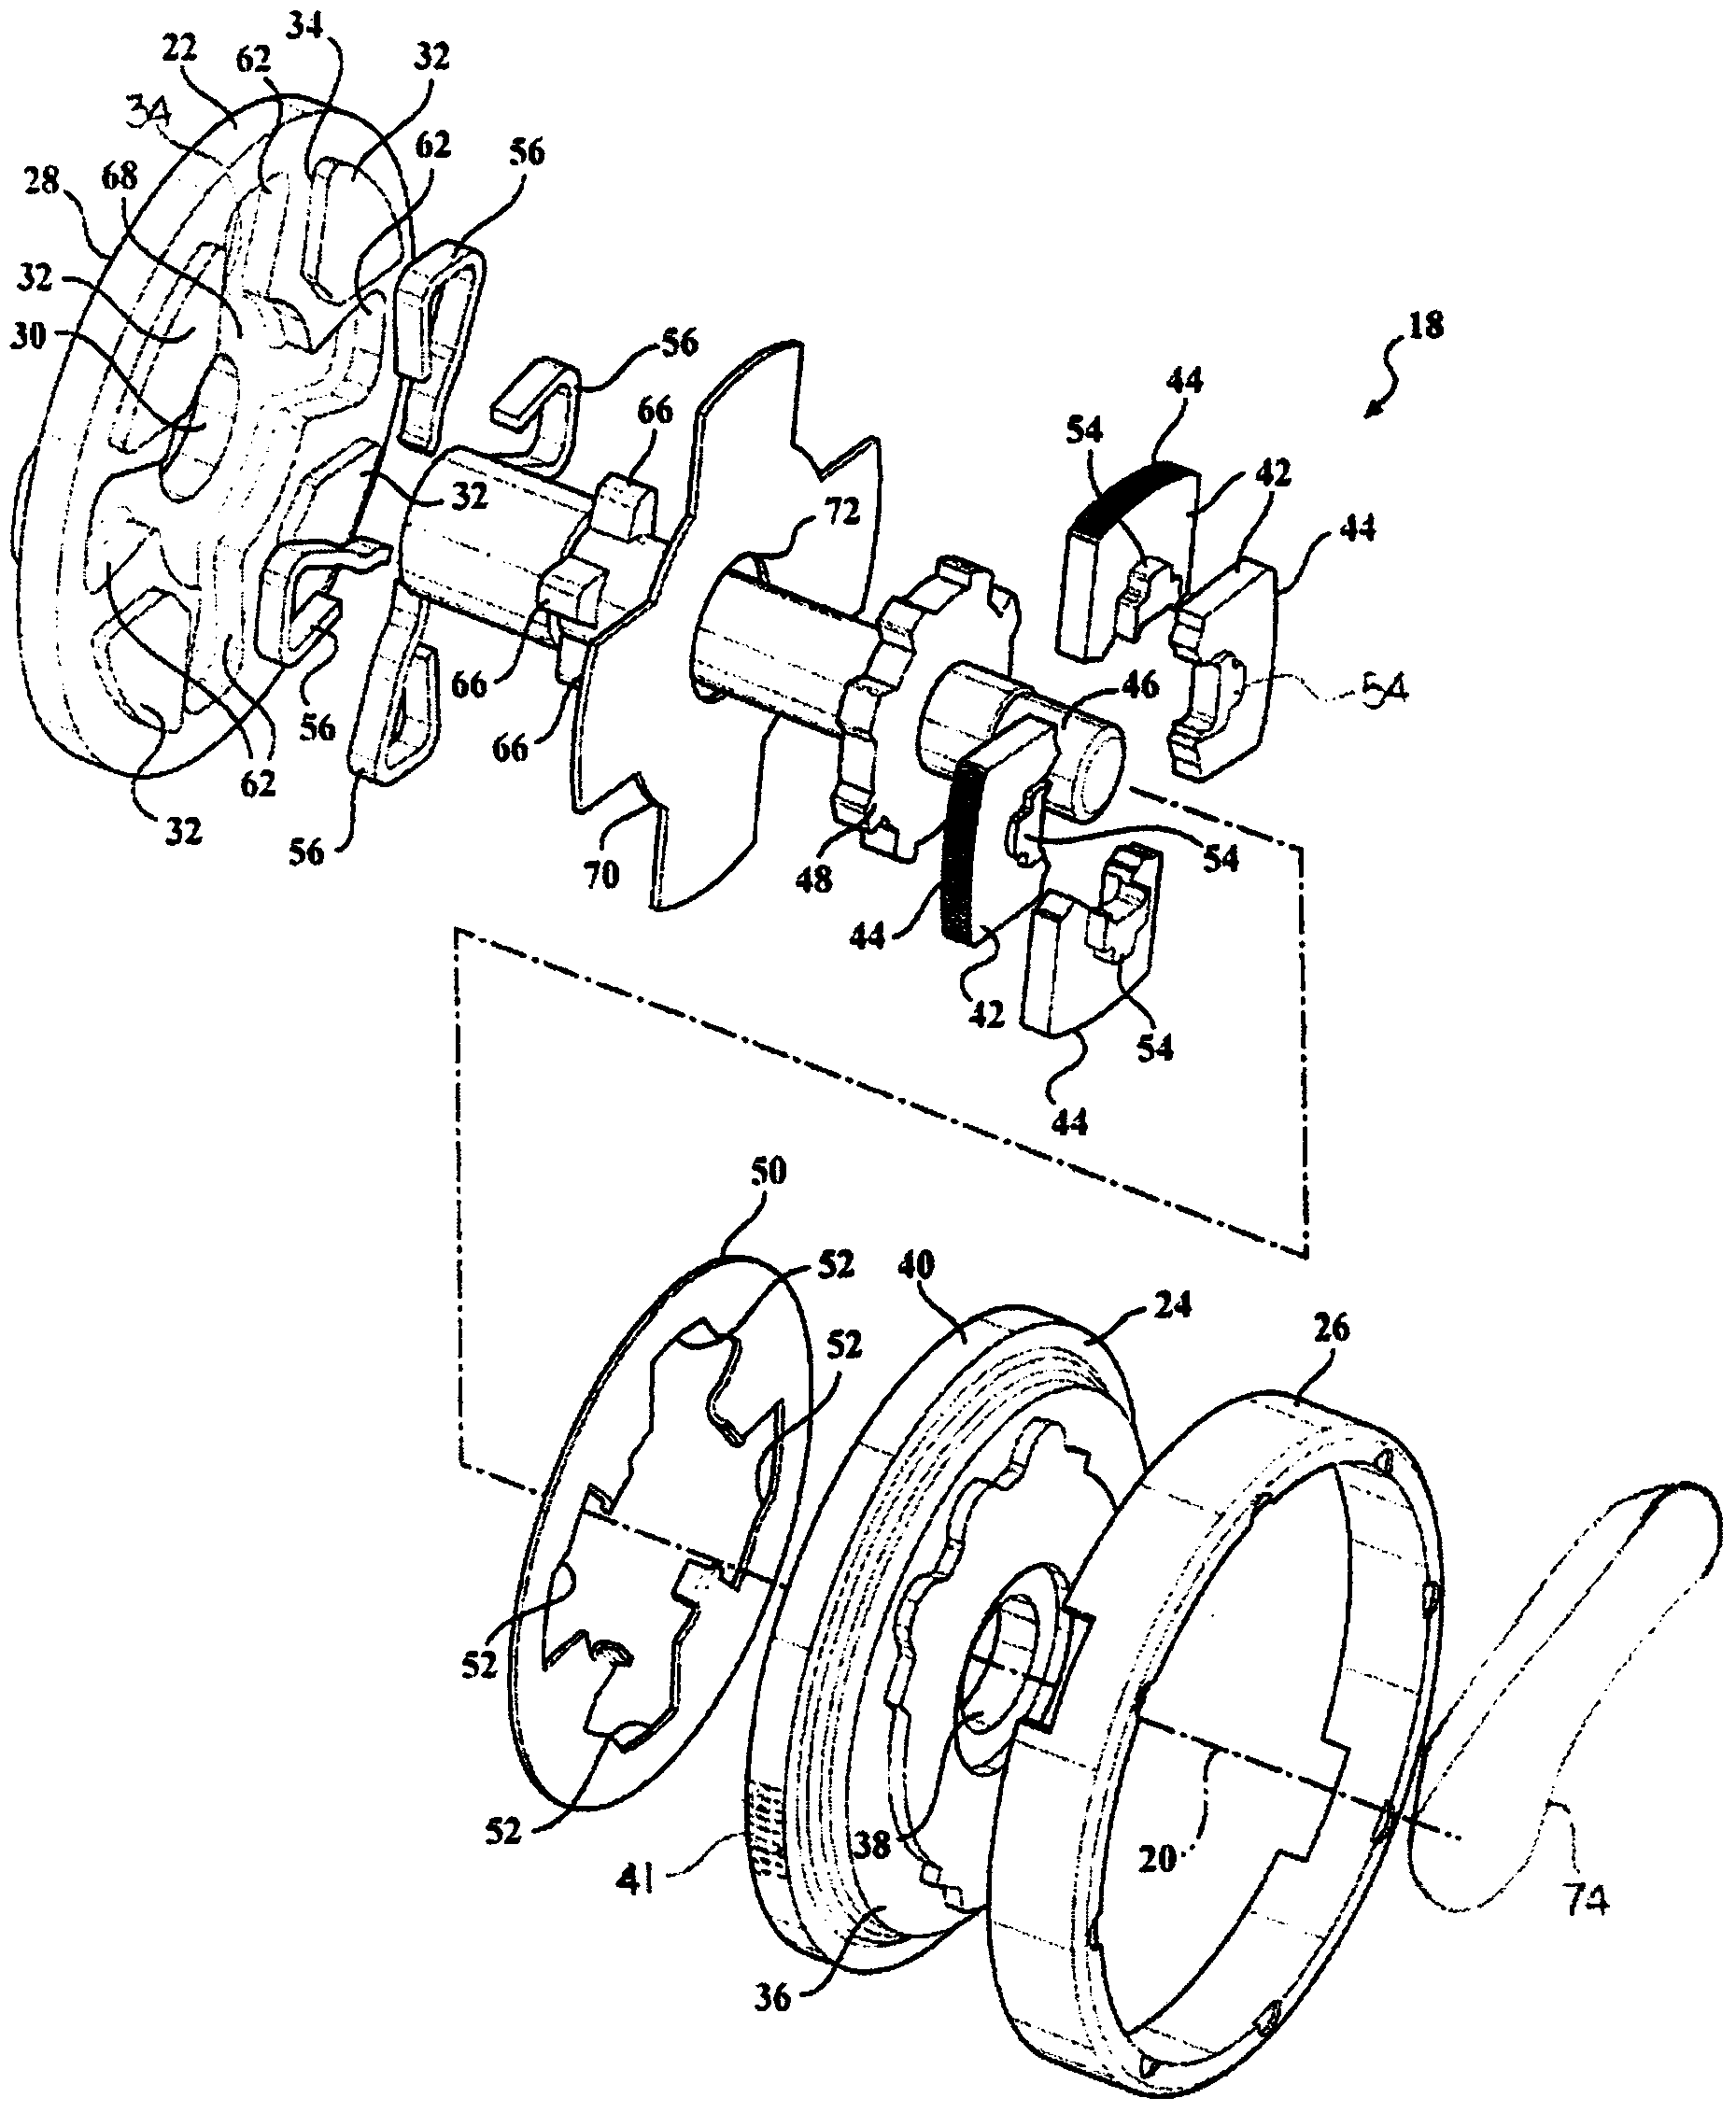 Disc recliner with internal leaf springs